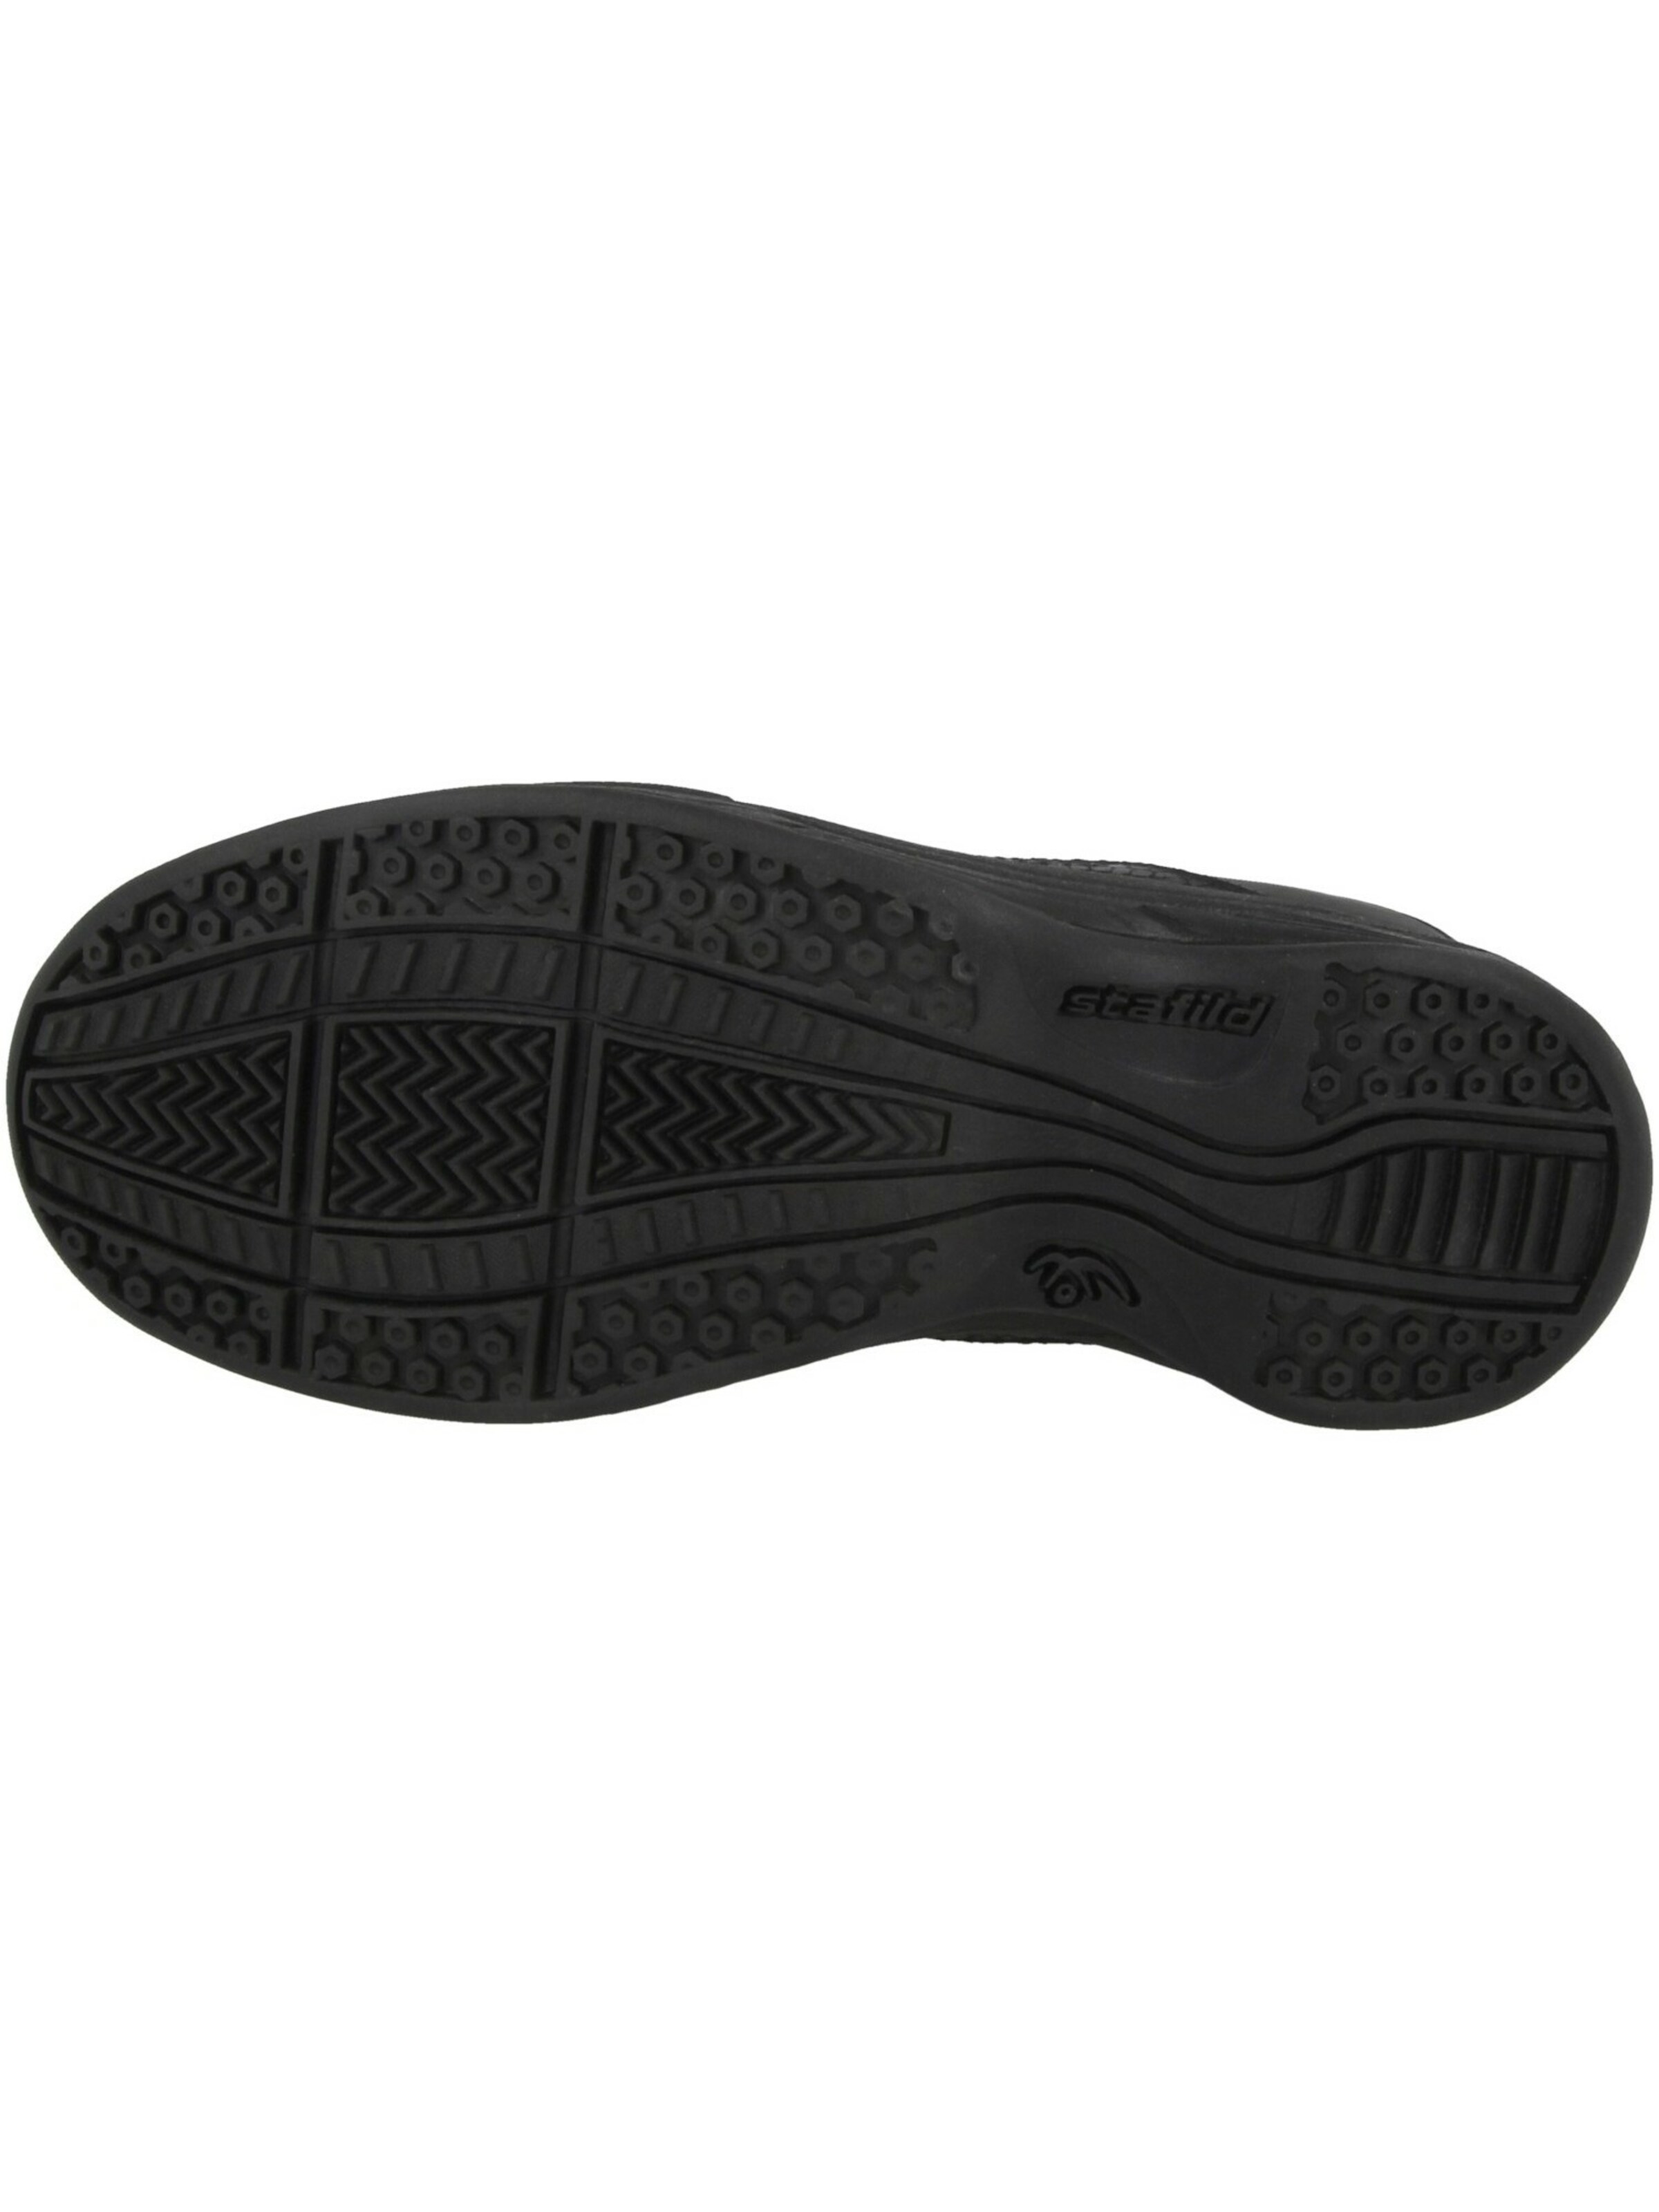 Chaussures Baskets basses Comfort Step CHUNG SHI en Noir 